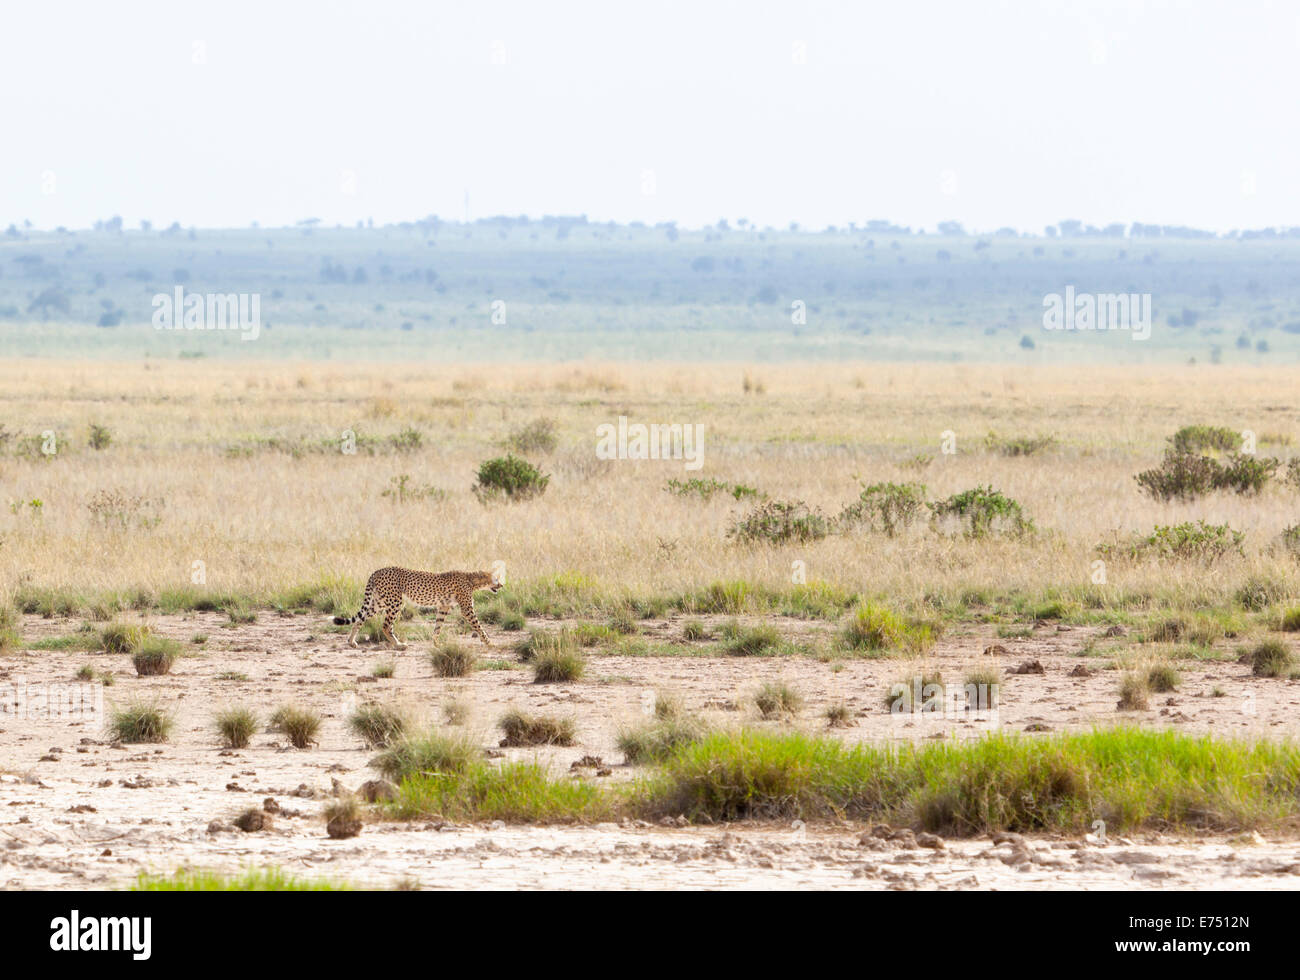 An Cheetah in Amboseli National Park in Kenya. Stock Photo